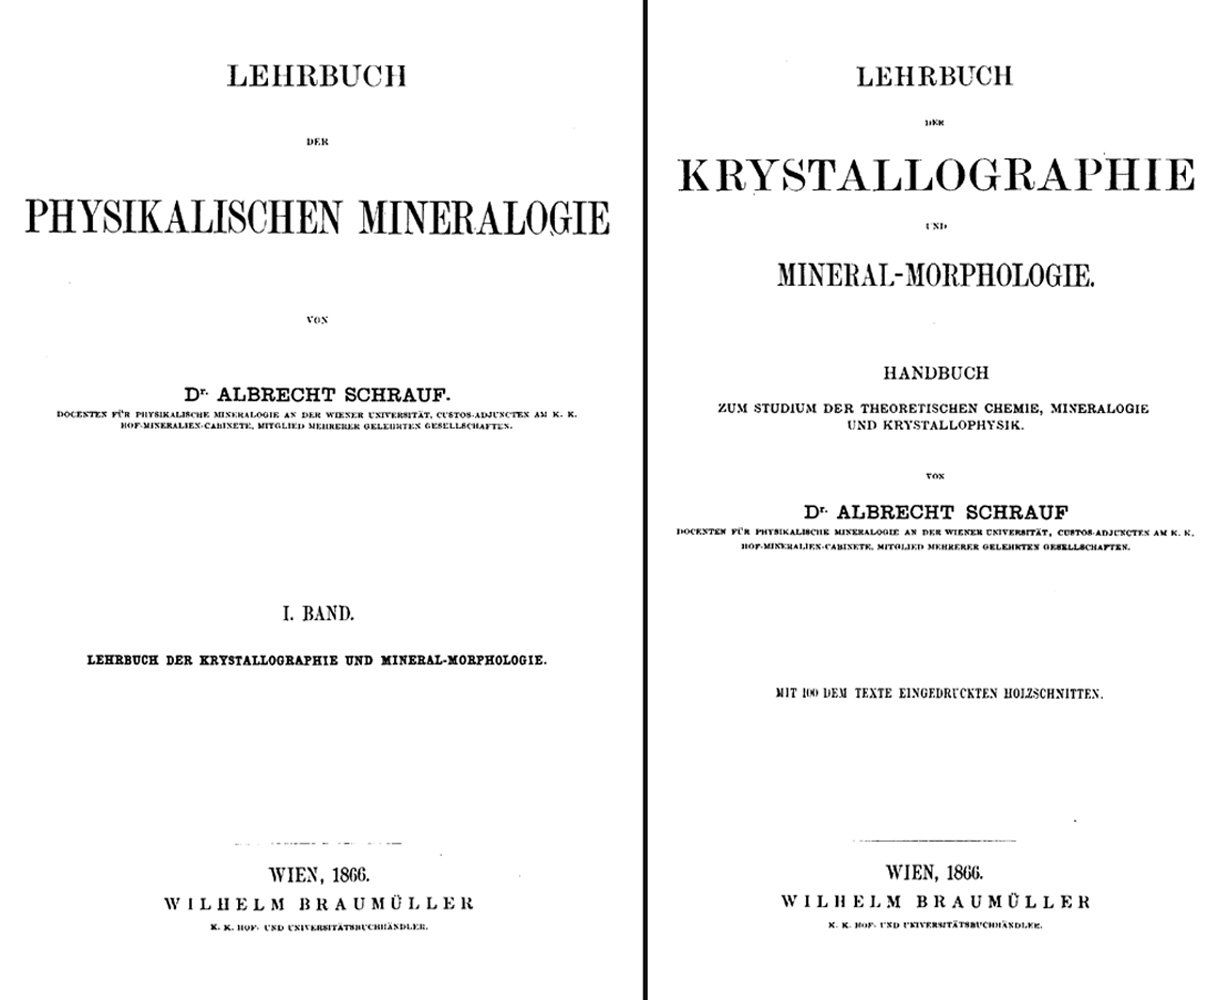 Schrauf Albrecht : Mineralogical Record